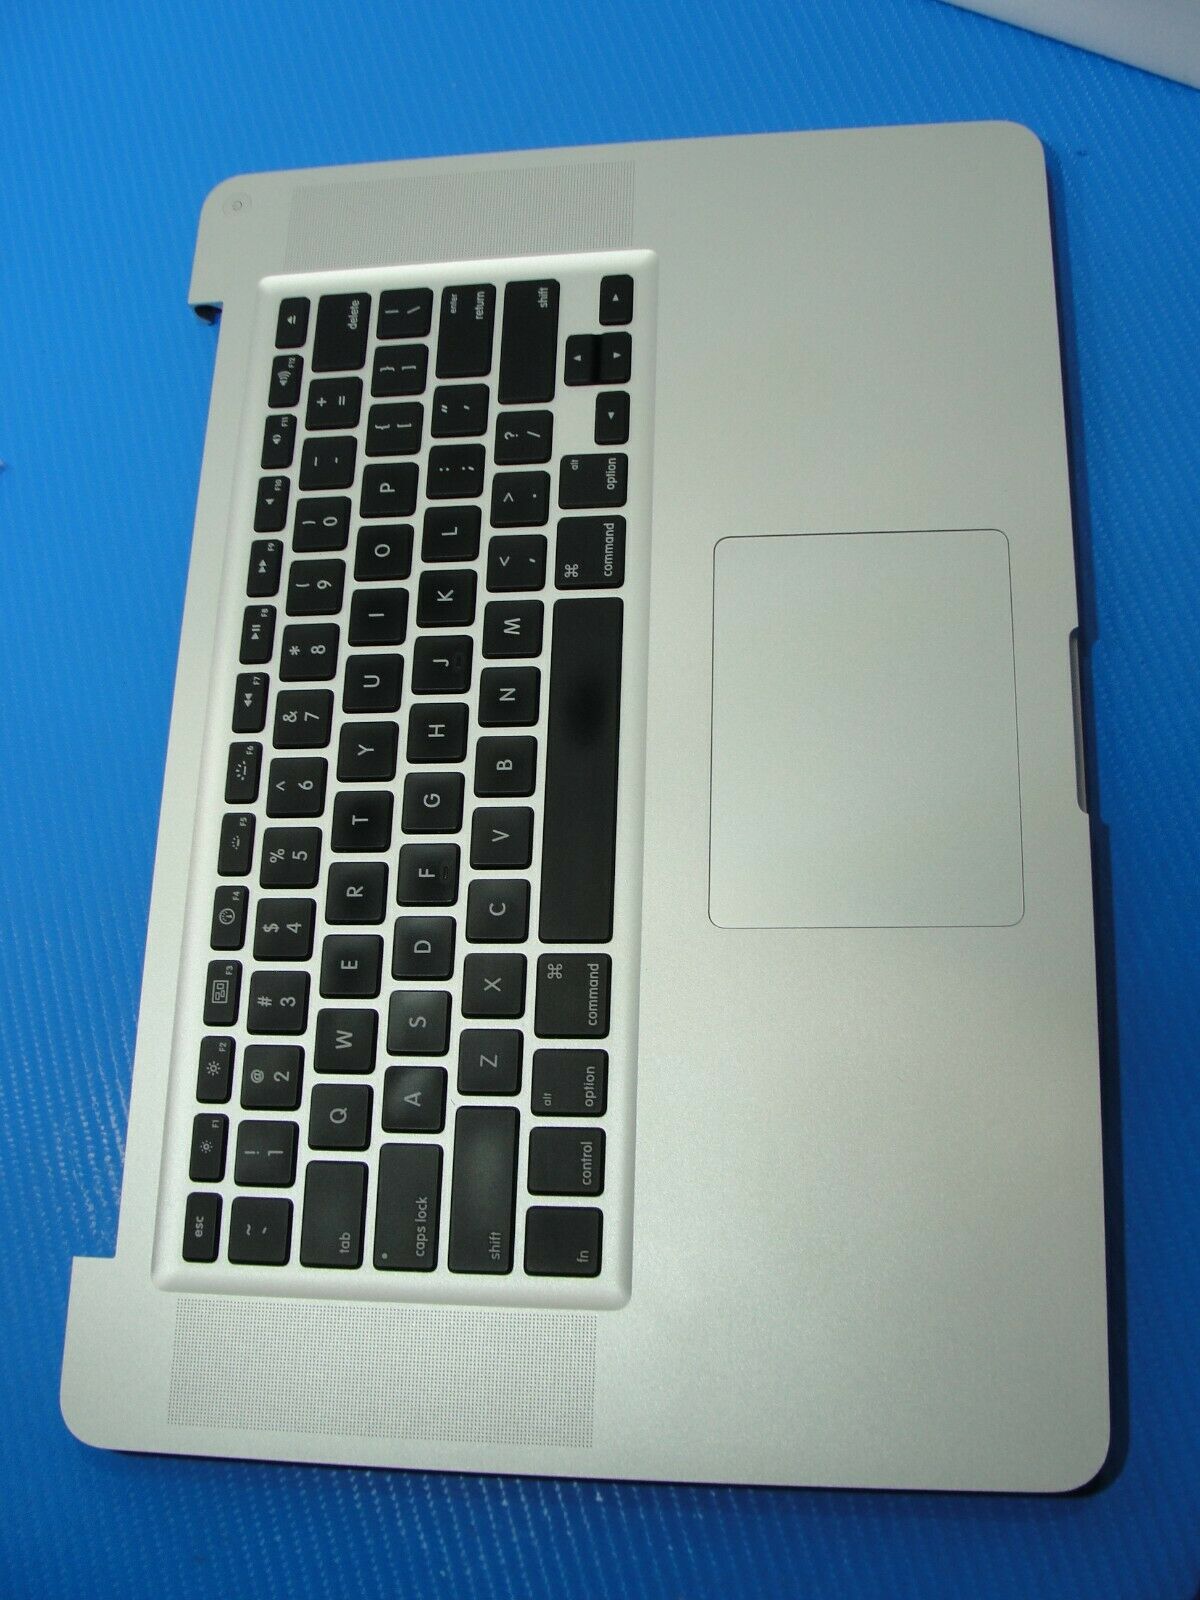 MacBook Pro A1286 MC721LL/A Early 2011 15